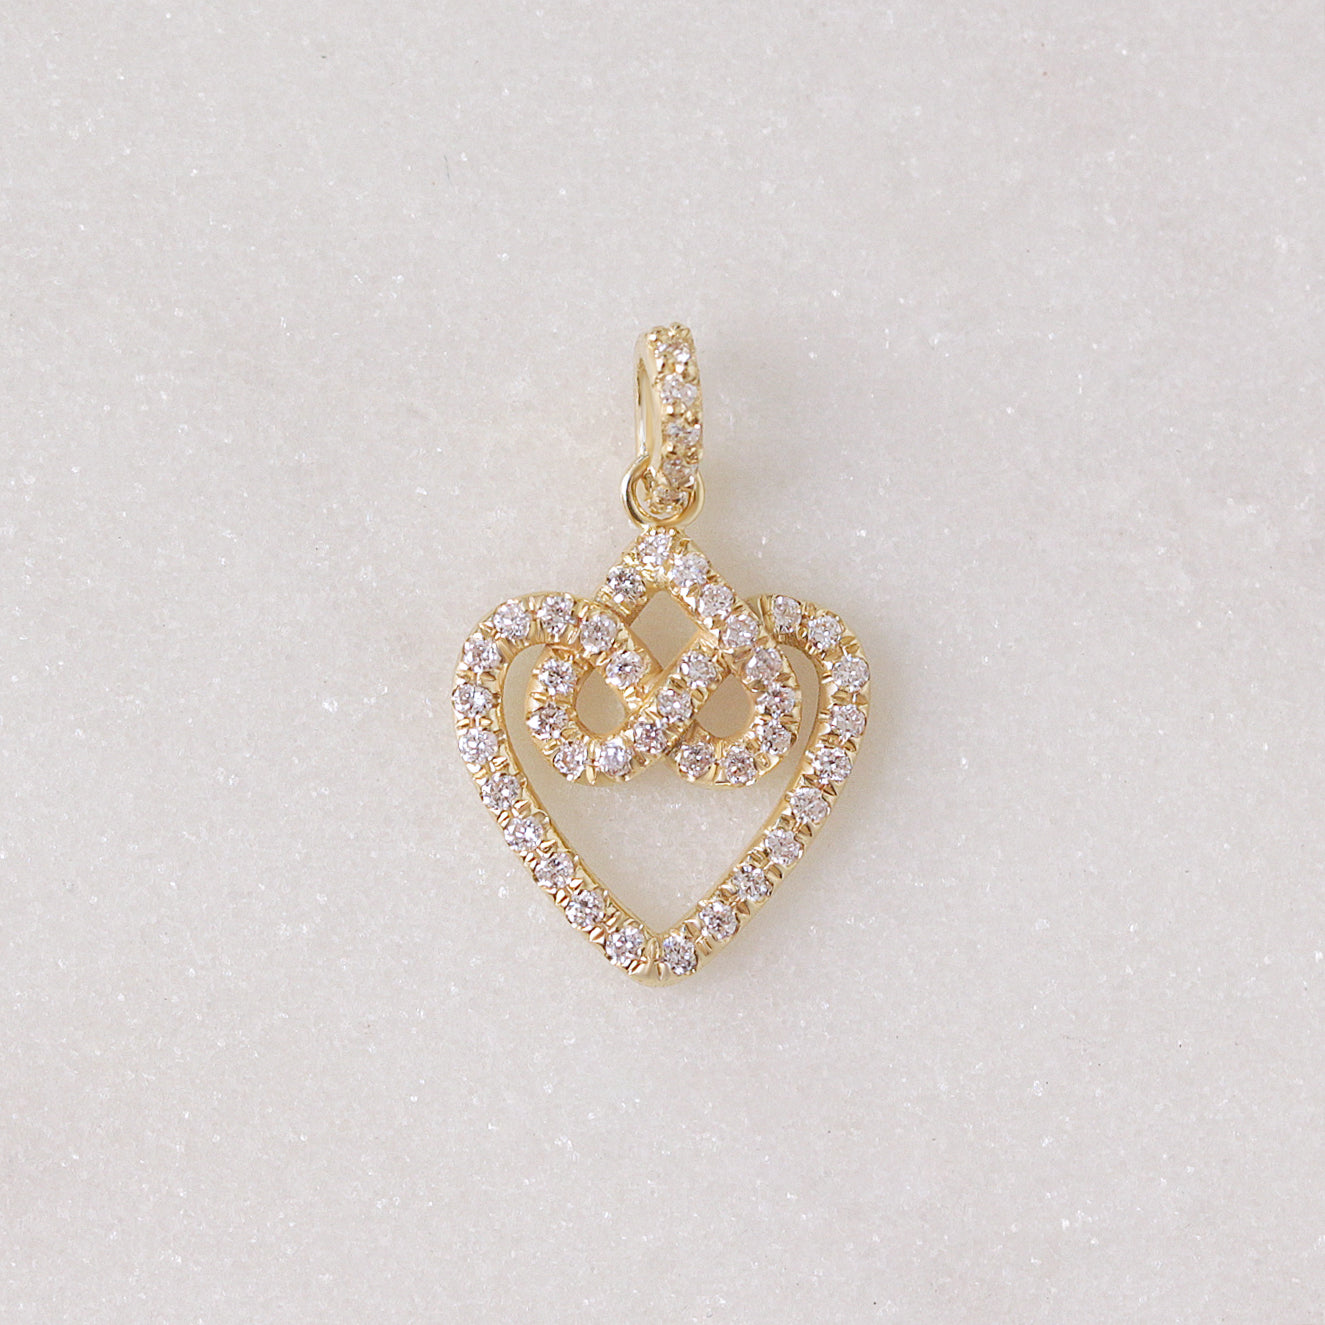 Infinity hearts lock knot dainty diamond pendant necklace ♥